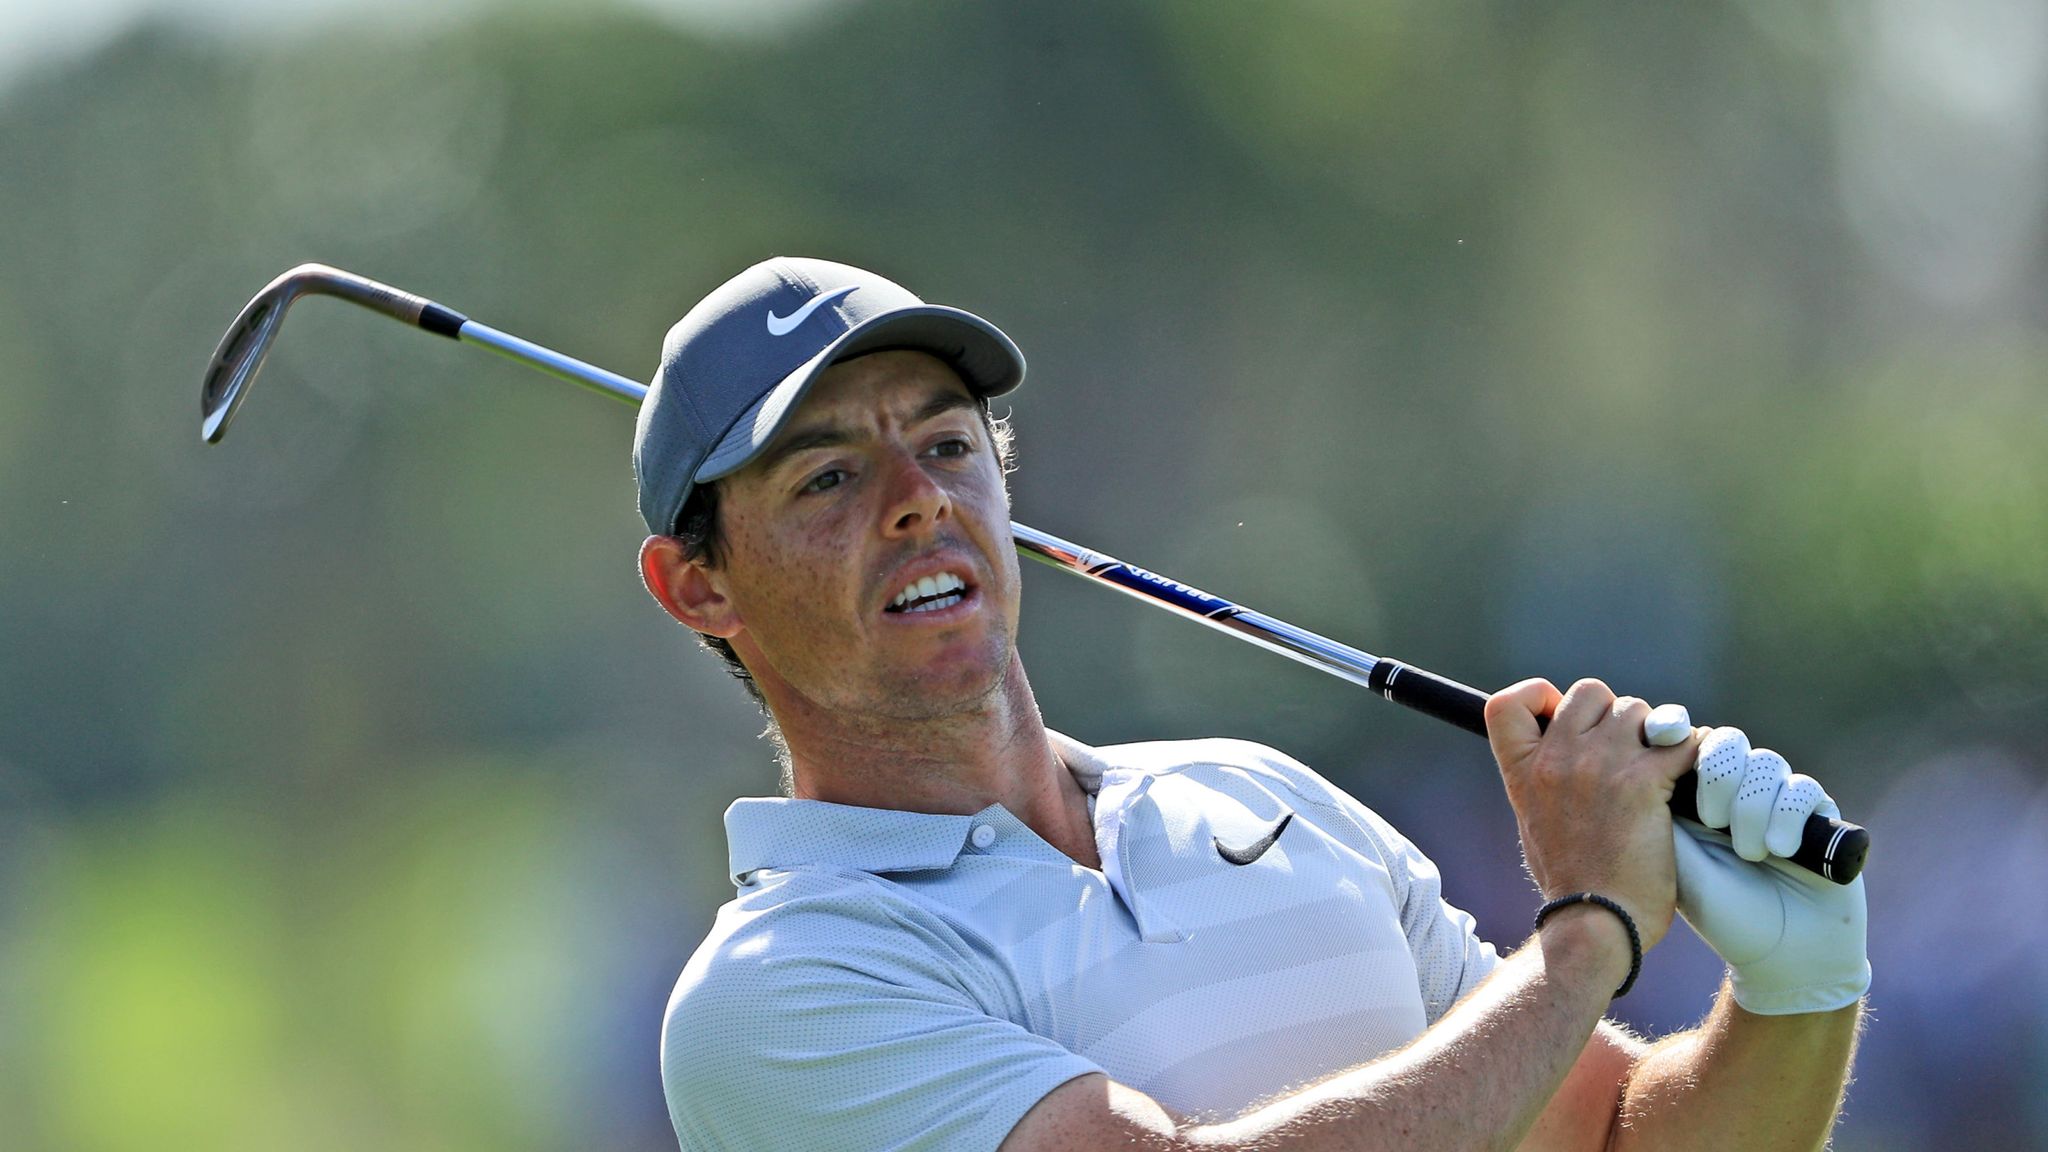 Valspar Championship Rory McIlroy, Tiger Woods both make debuts Golf News Sky Sports